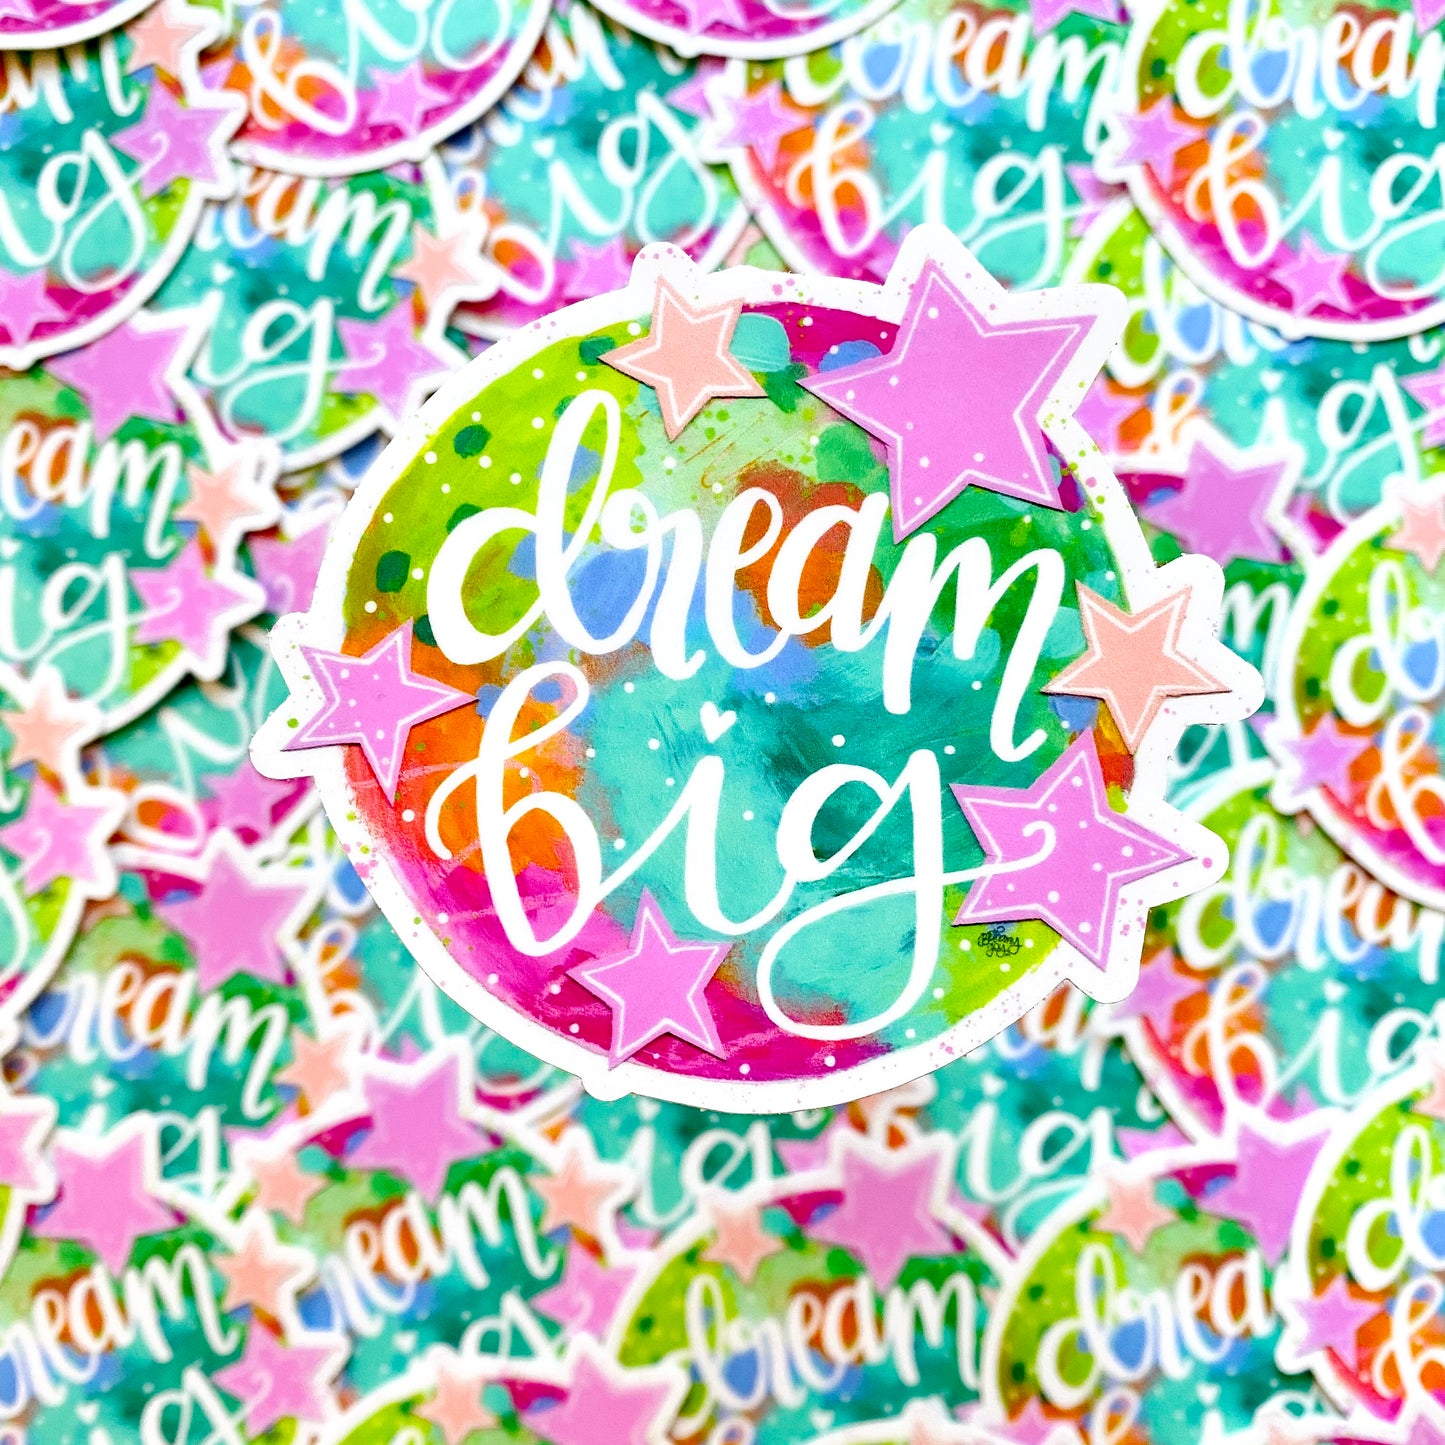 Dream Big Vinyl Sticker - January 2021 Sticker of the Month